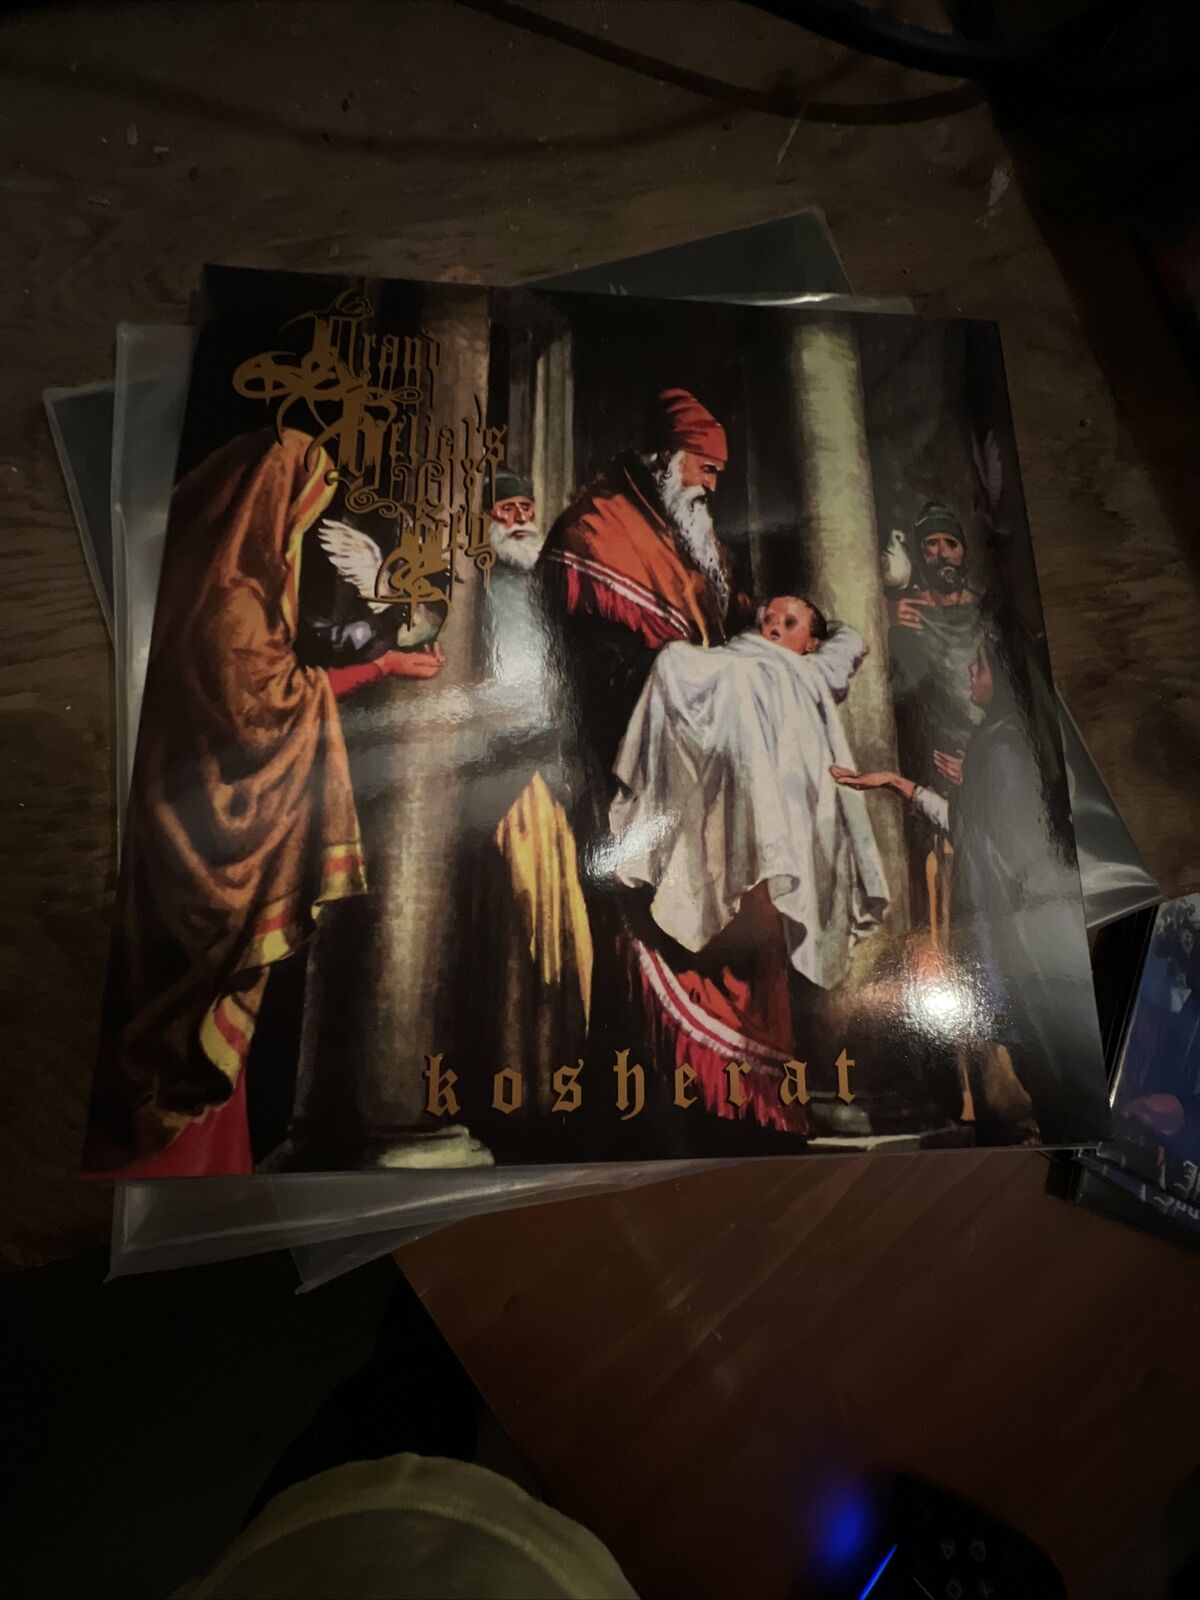 GRAND BELIAL'S KEY Kosherat DOUBLE LP GATEFOLD Picture Discs 2019